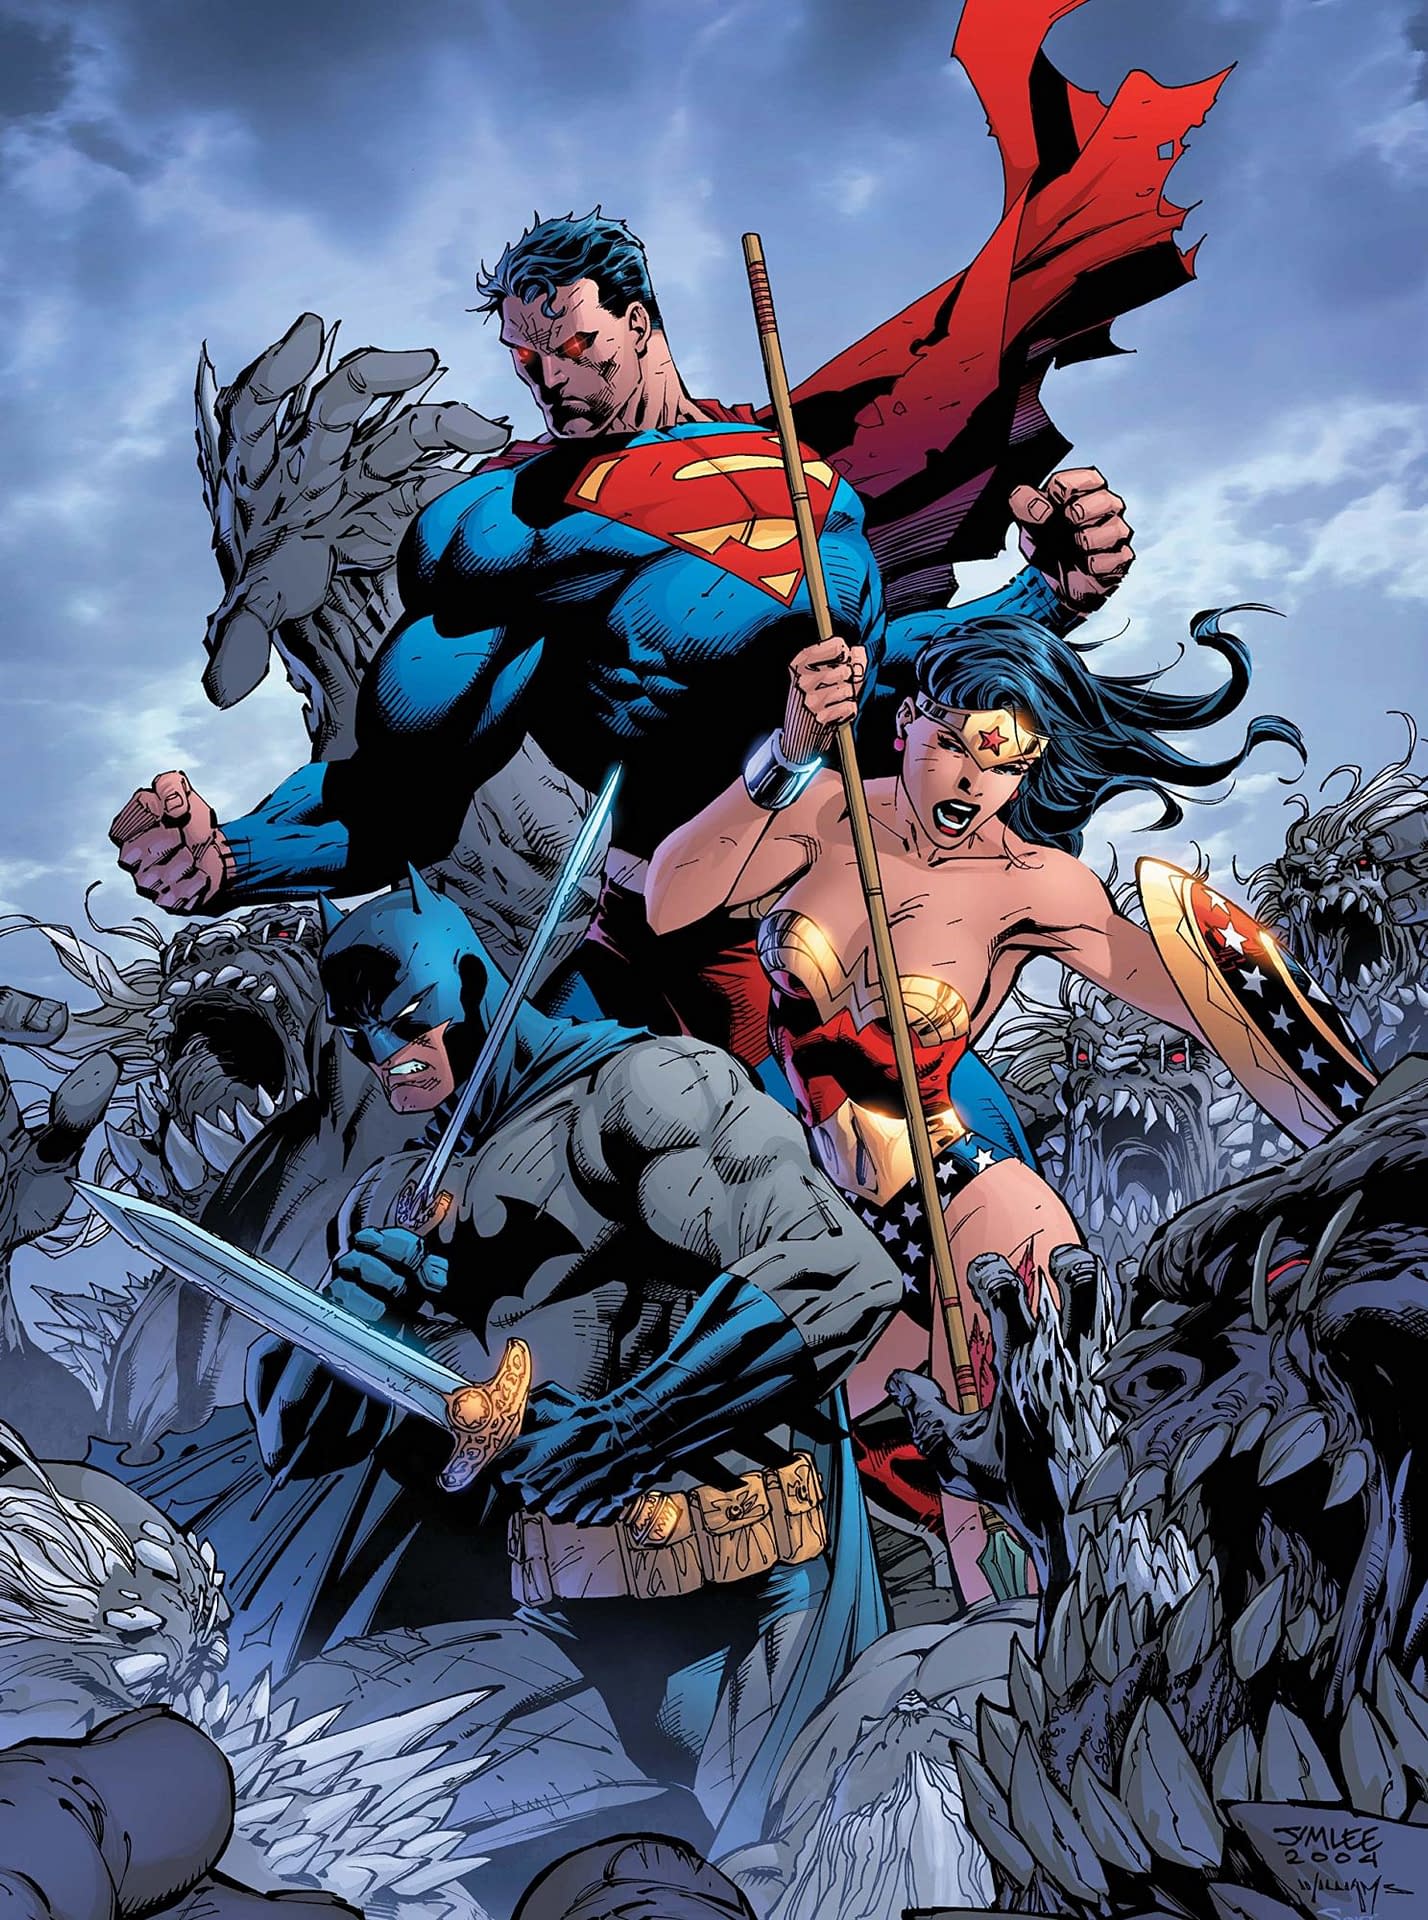 Jim Lee & DC Comics' Two Year Plan For Global Digital Dominance